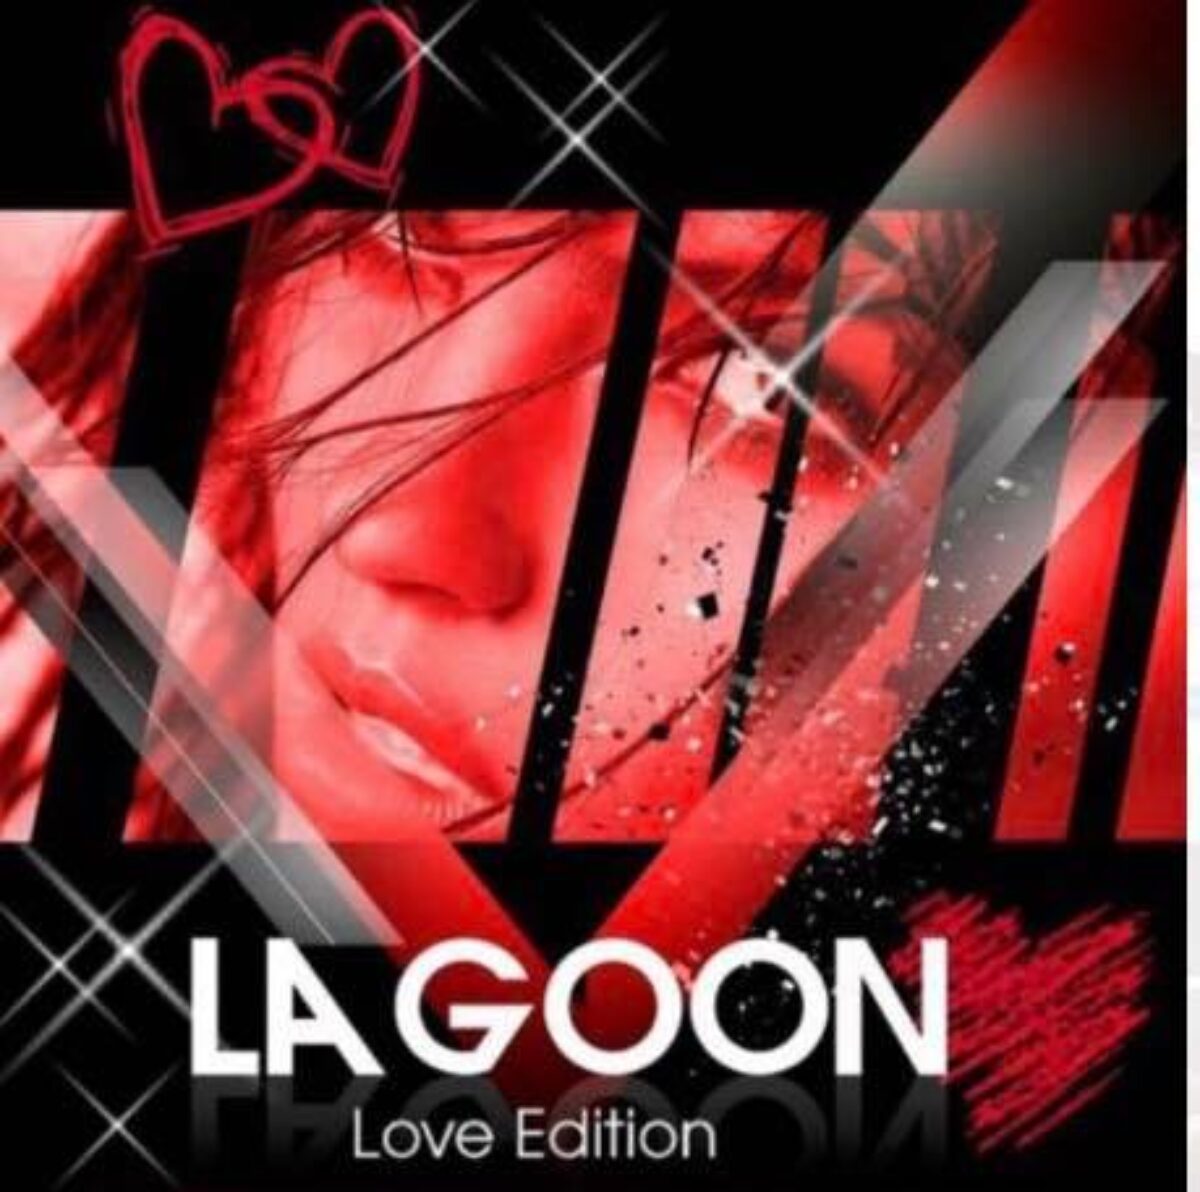 LAgoon Antwerpen: LOVE edition